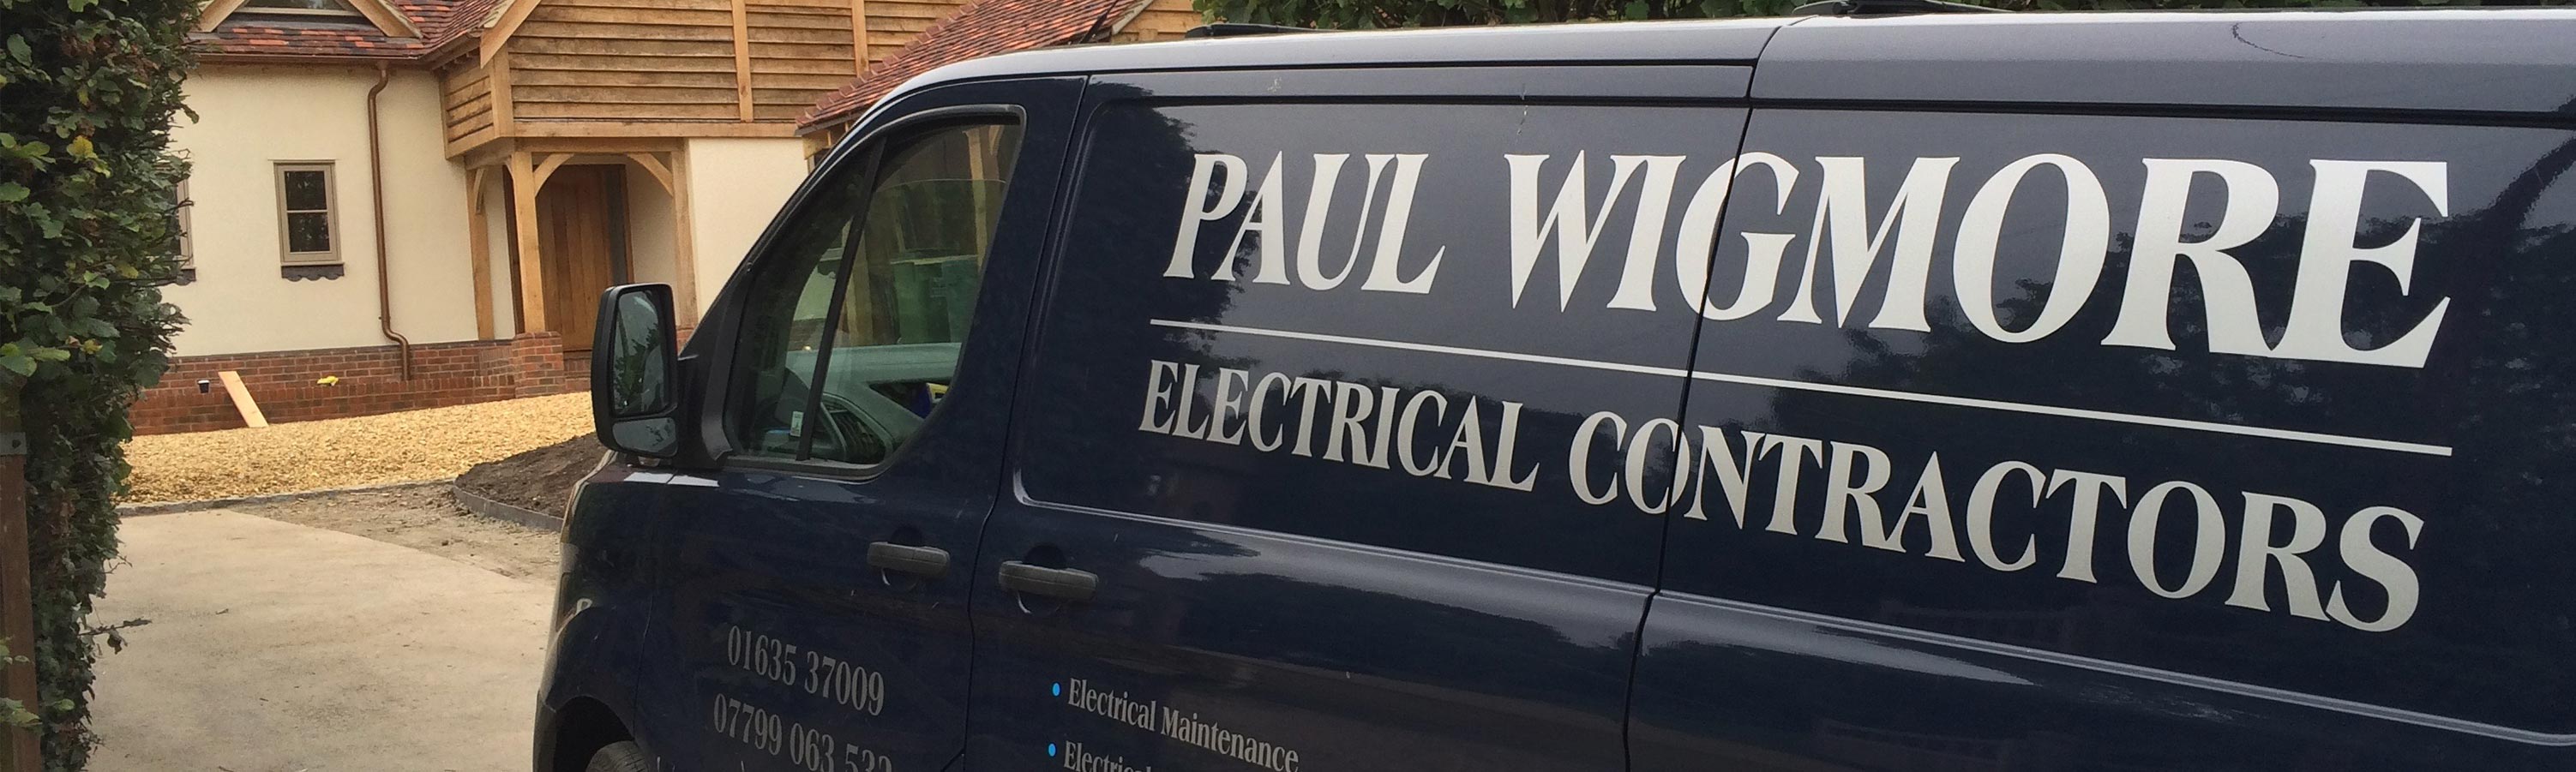 Paul Wigmore Electrical